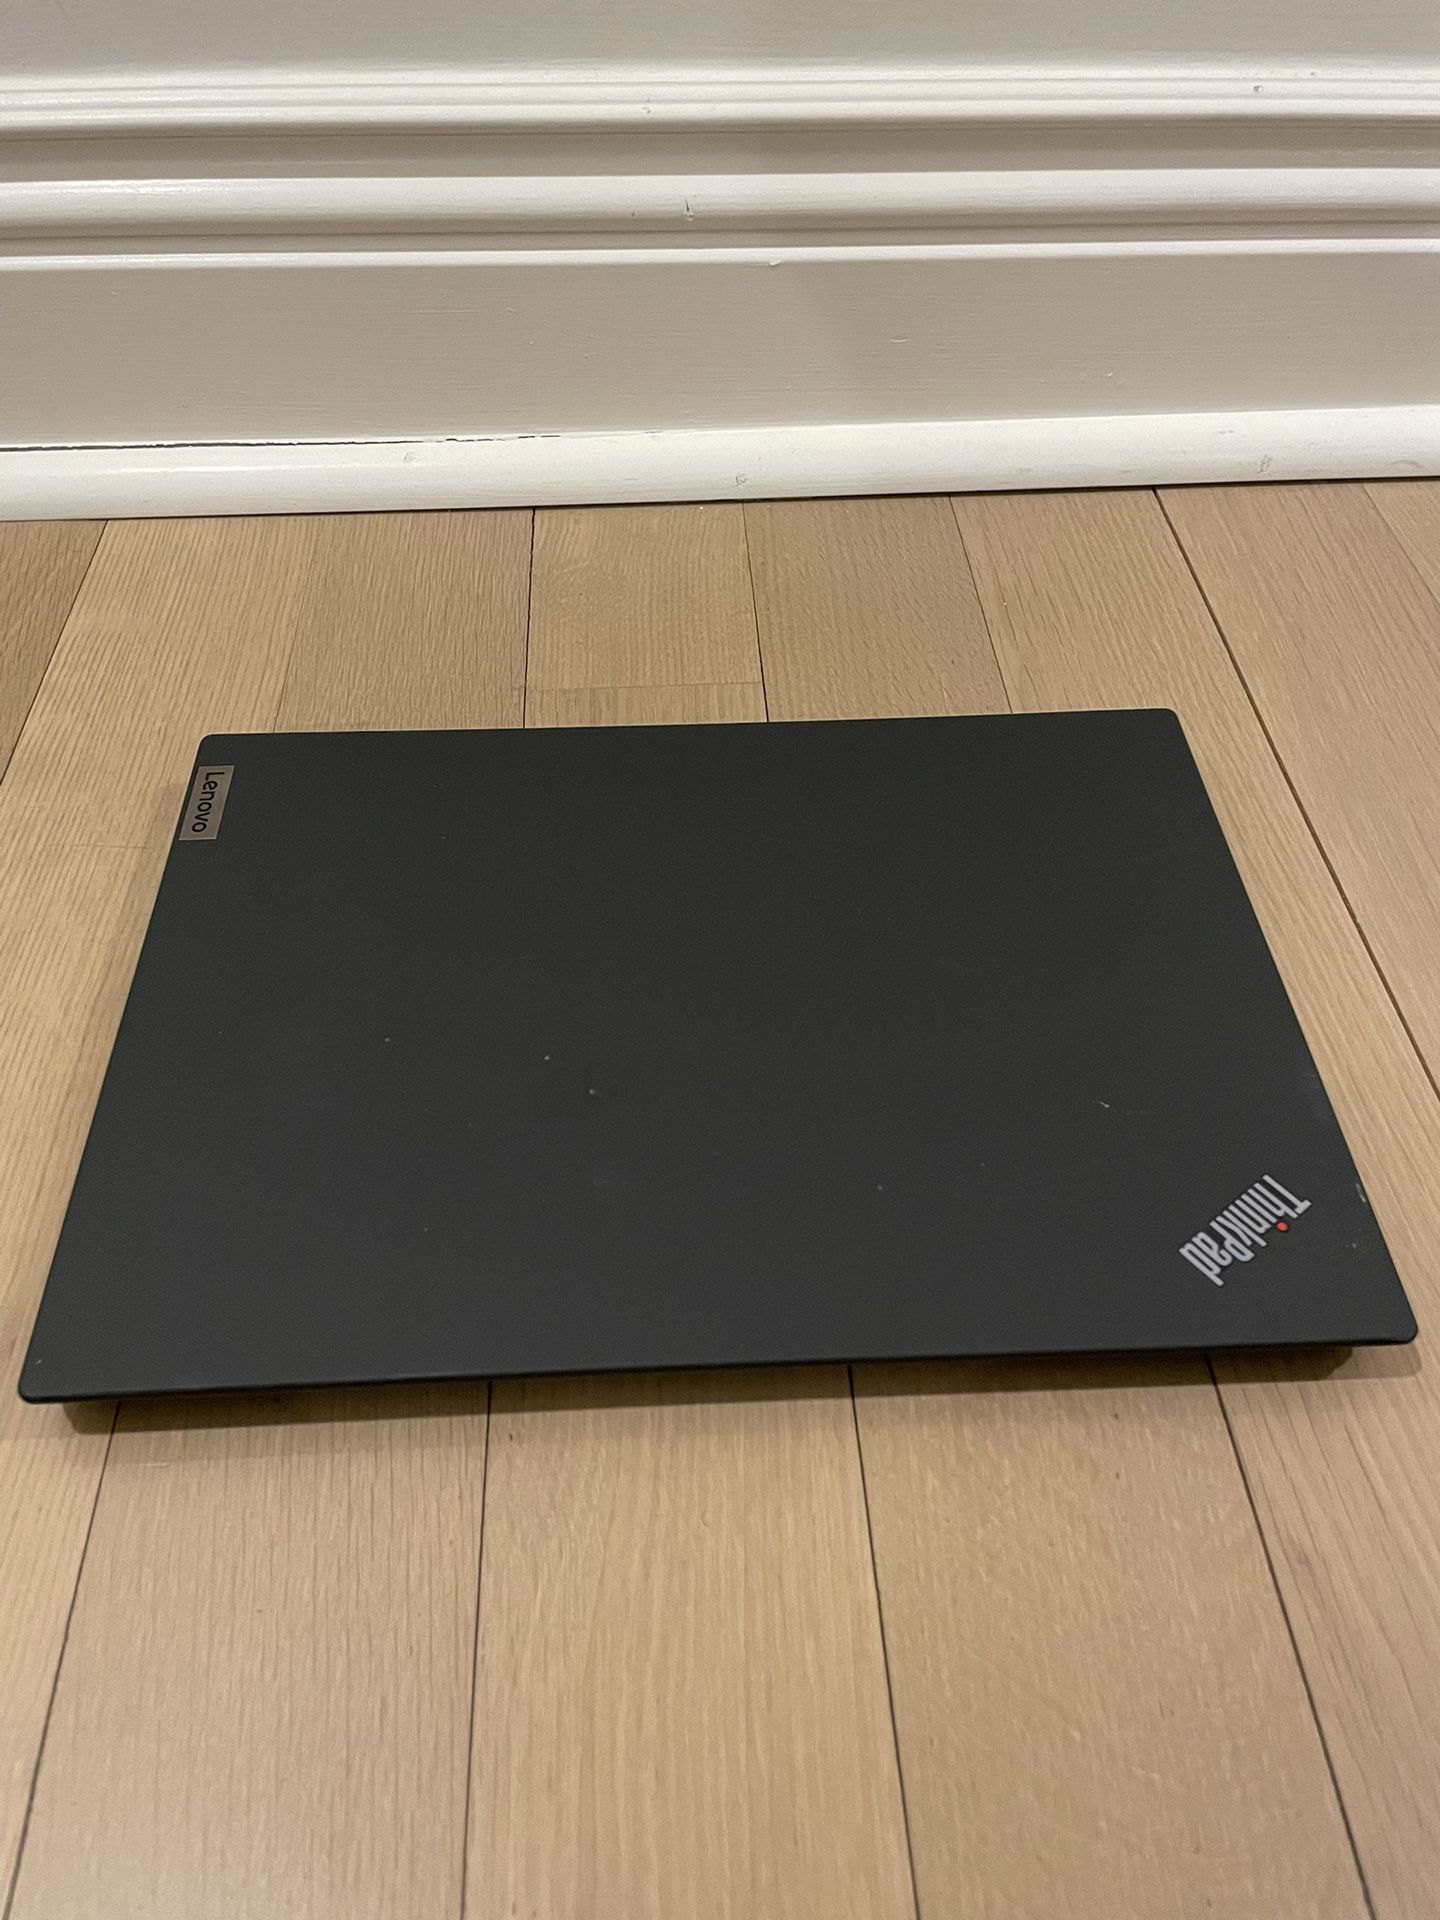 Lenovo ThinkPad X13 Gen 2